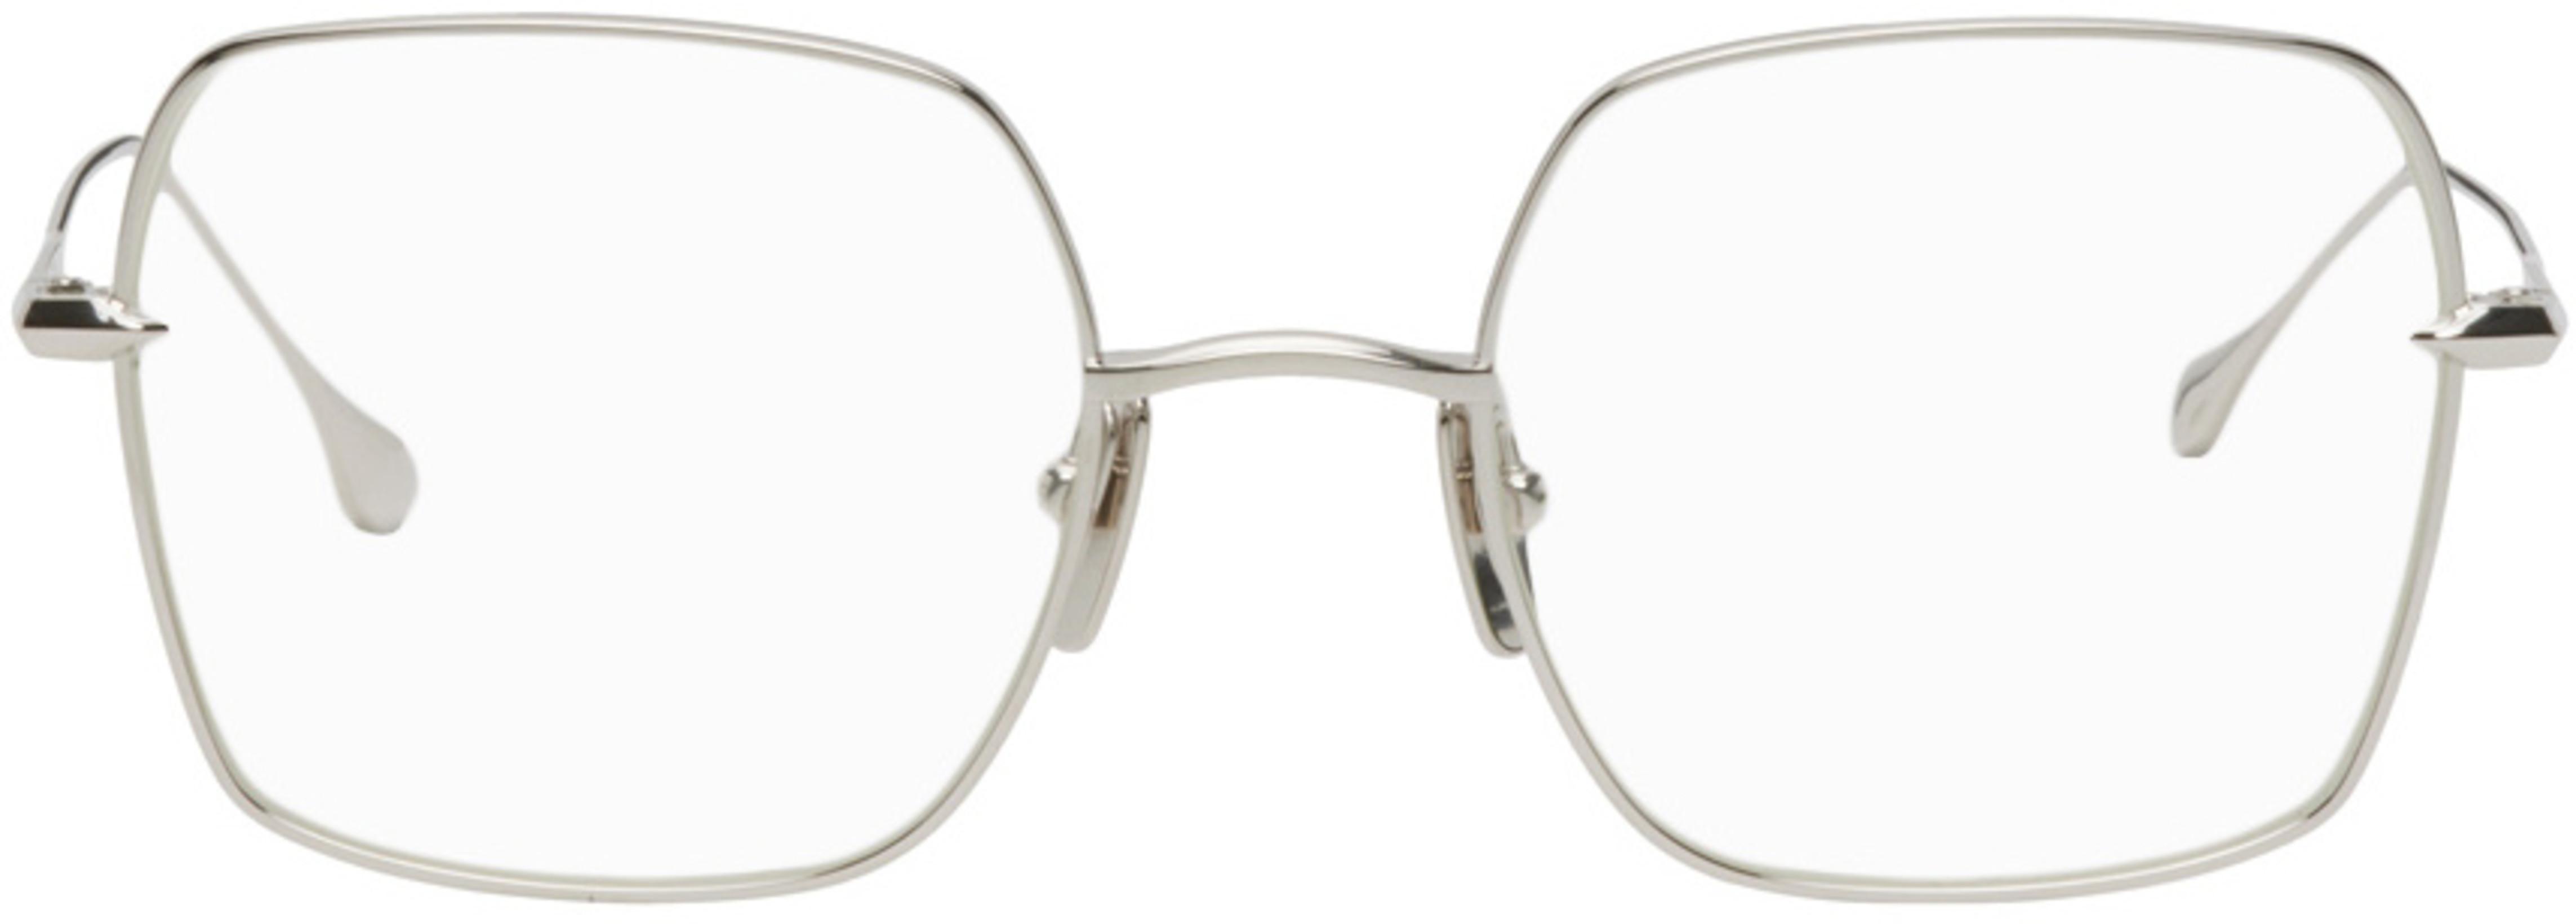 Silver Cerebal Glasses by DITA